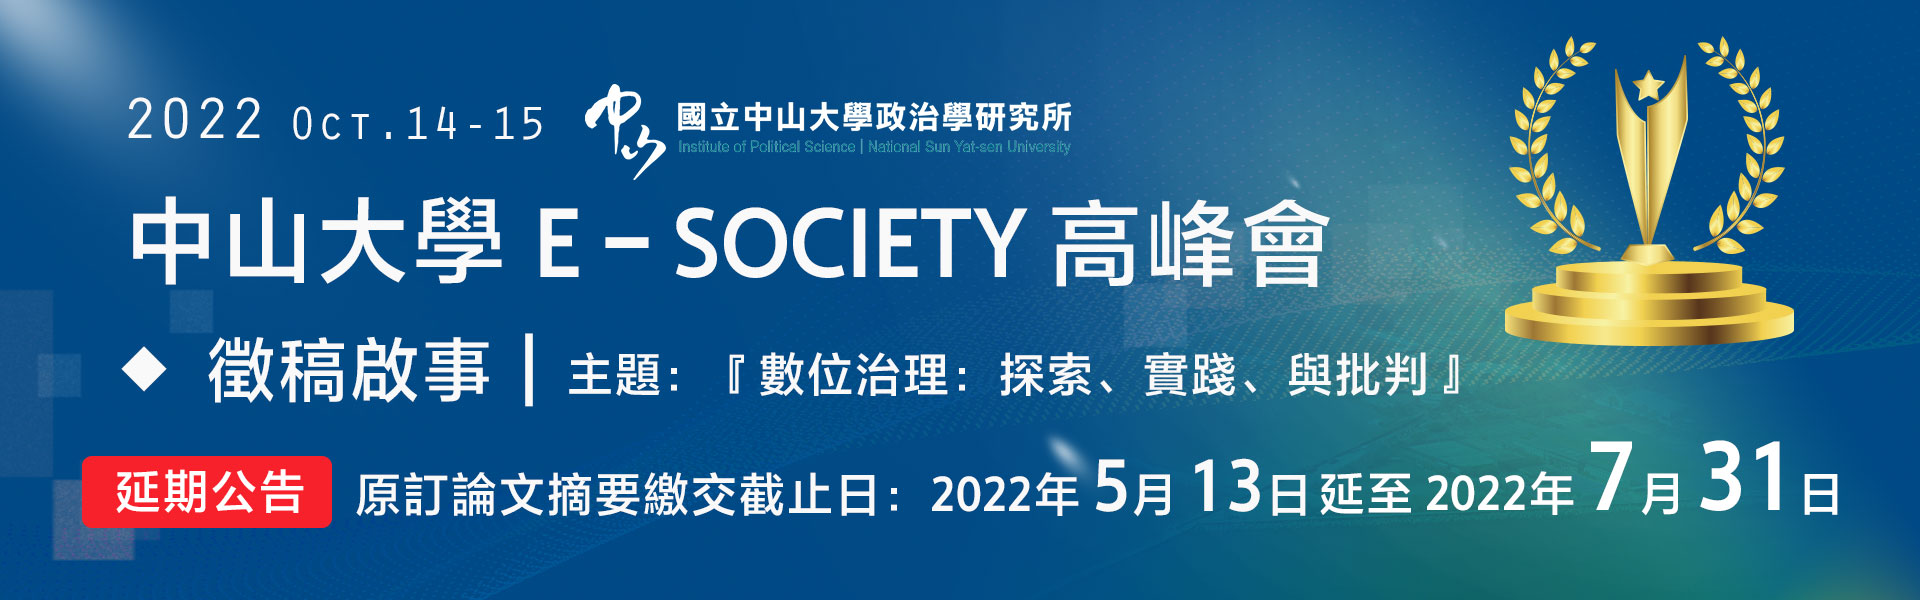 2022 E-society高峰會｜徵稿啟事